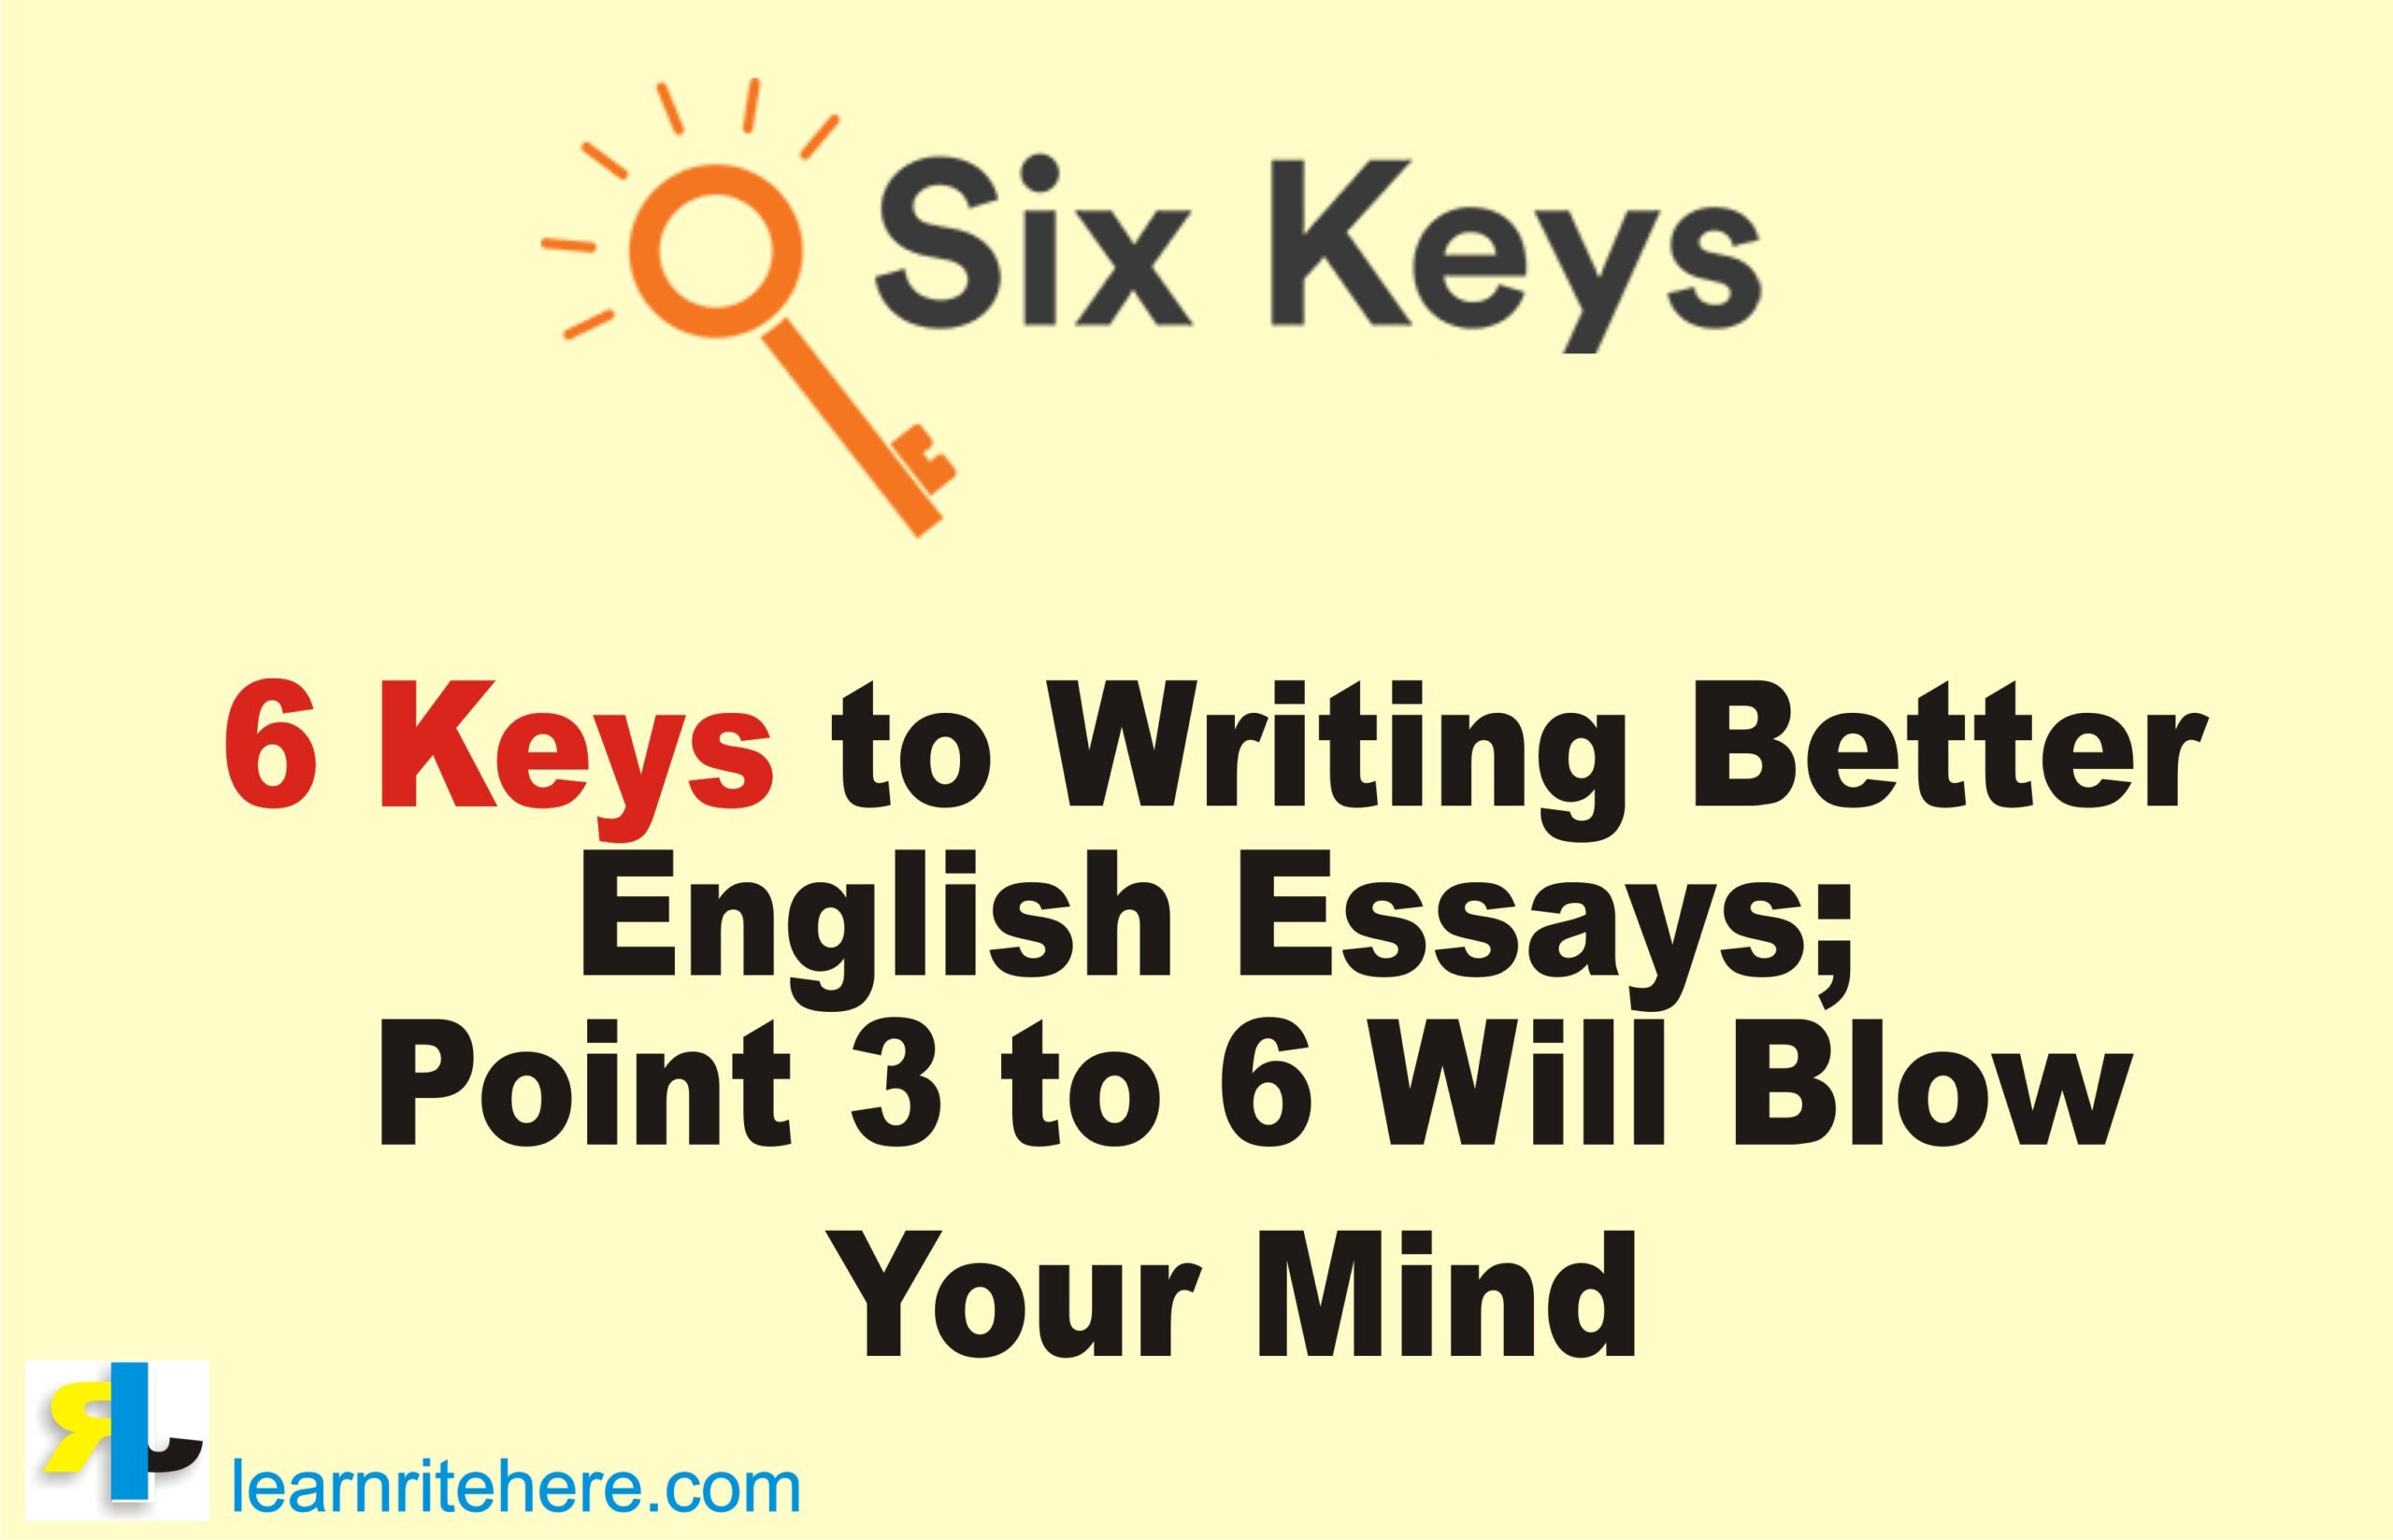 6-keys-to-writing-better-english-essays-learnritehere